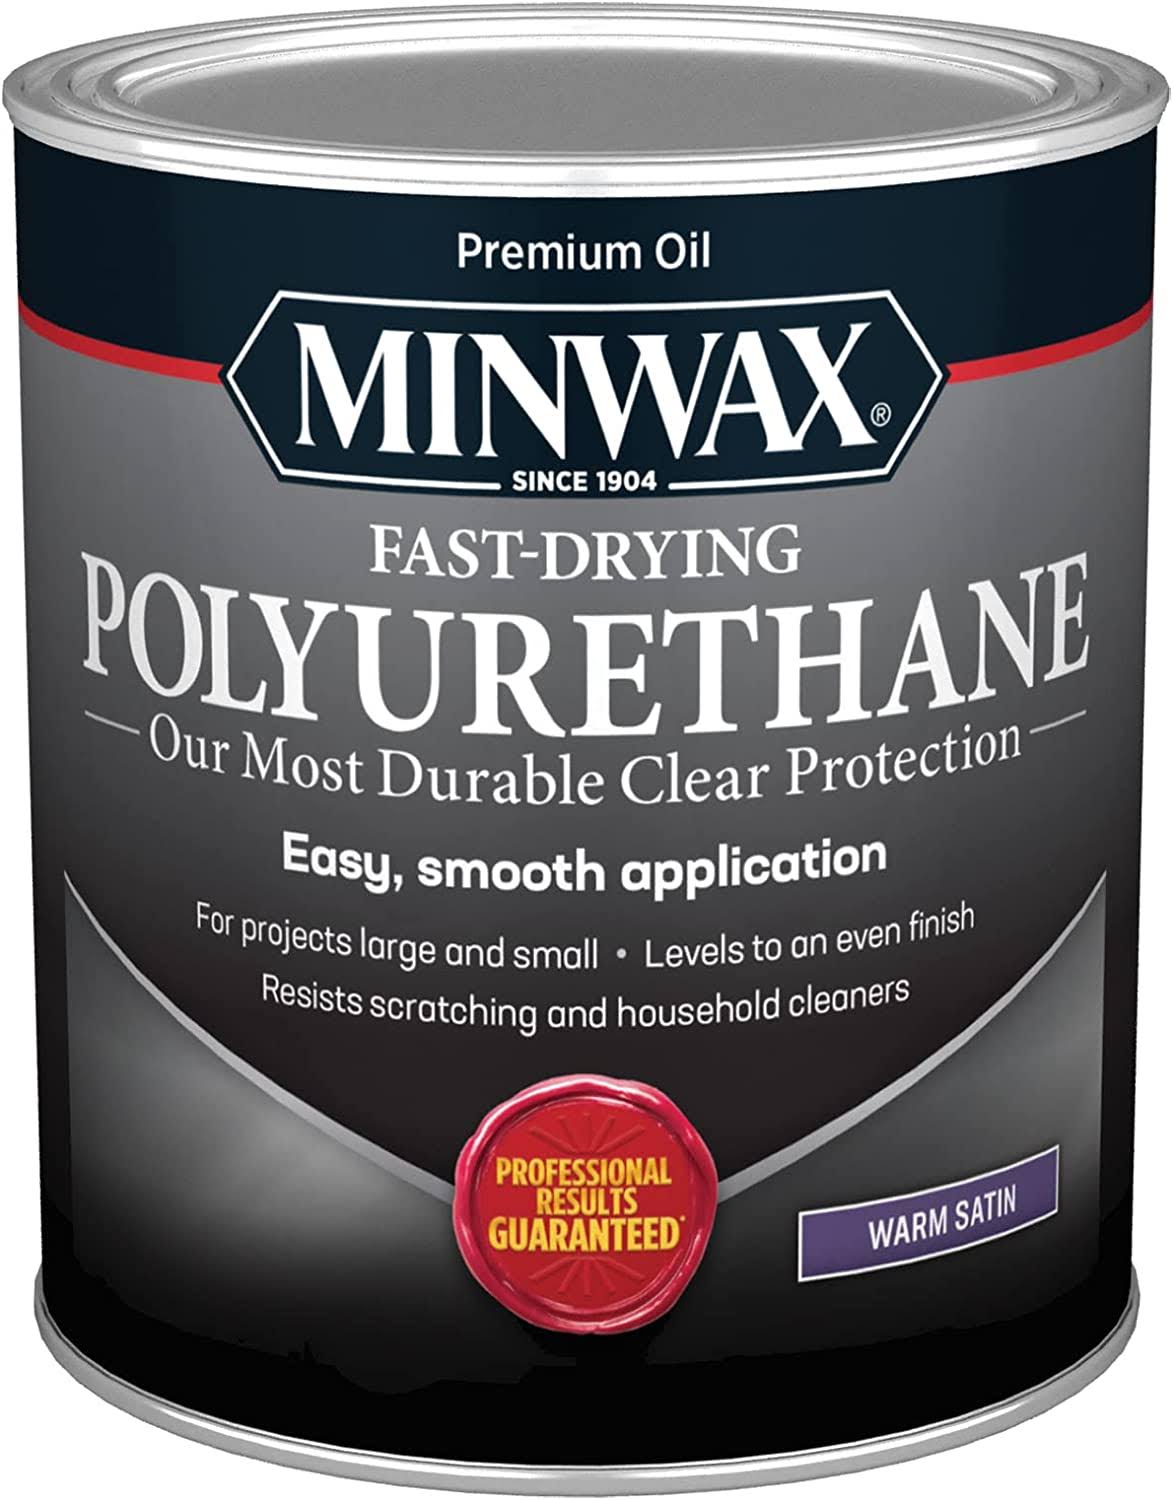 Minwax Fast-Drying Polyurethane - 3.8L, Gloss